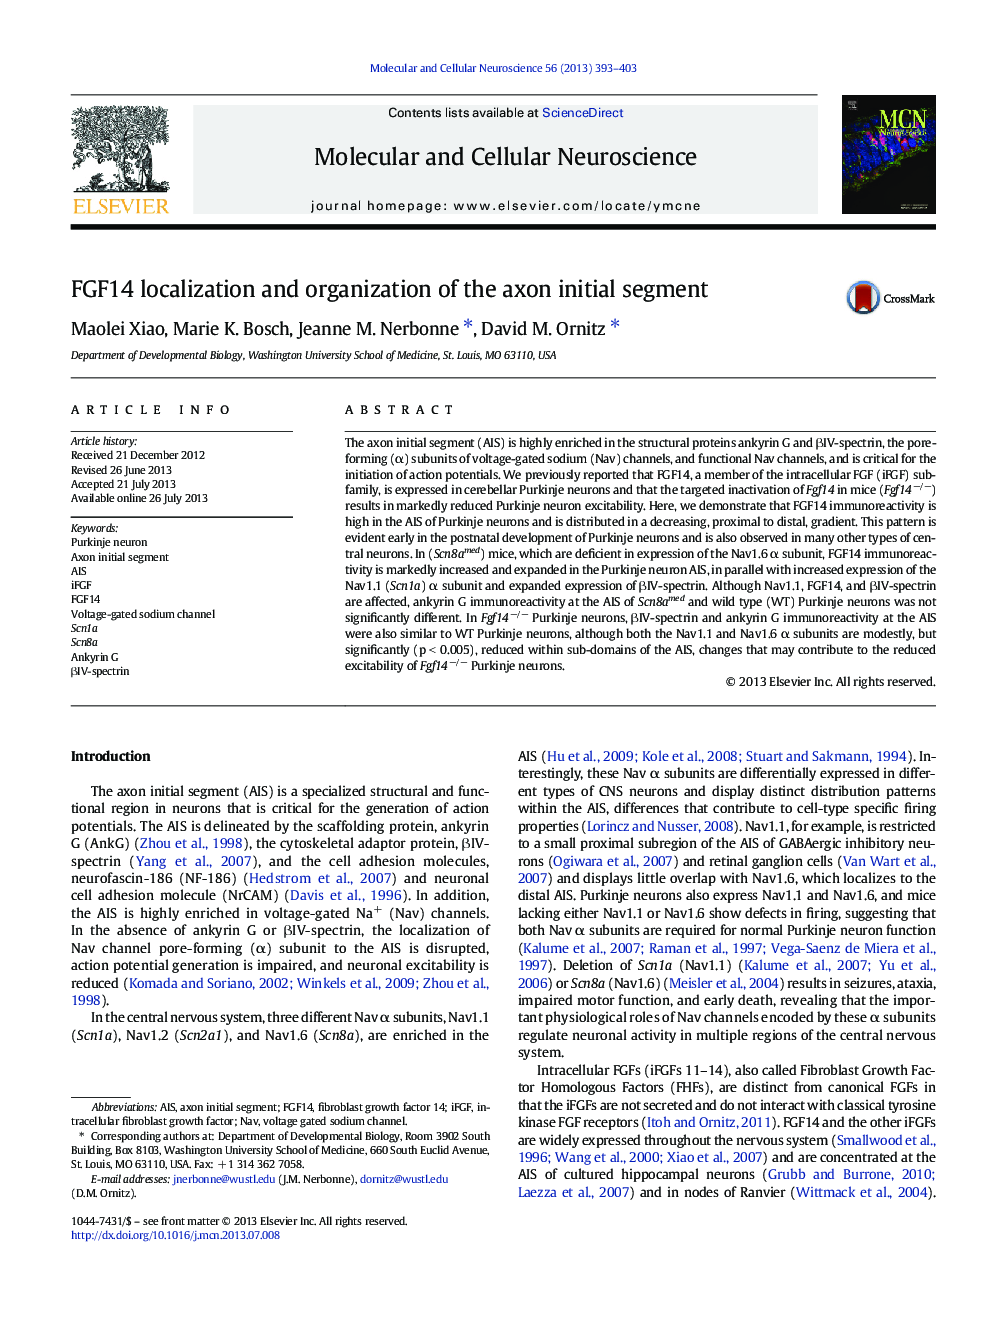 FGF14 localization and organization of the axon initial segment